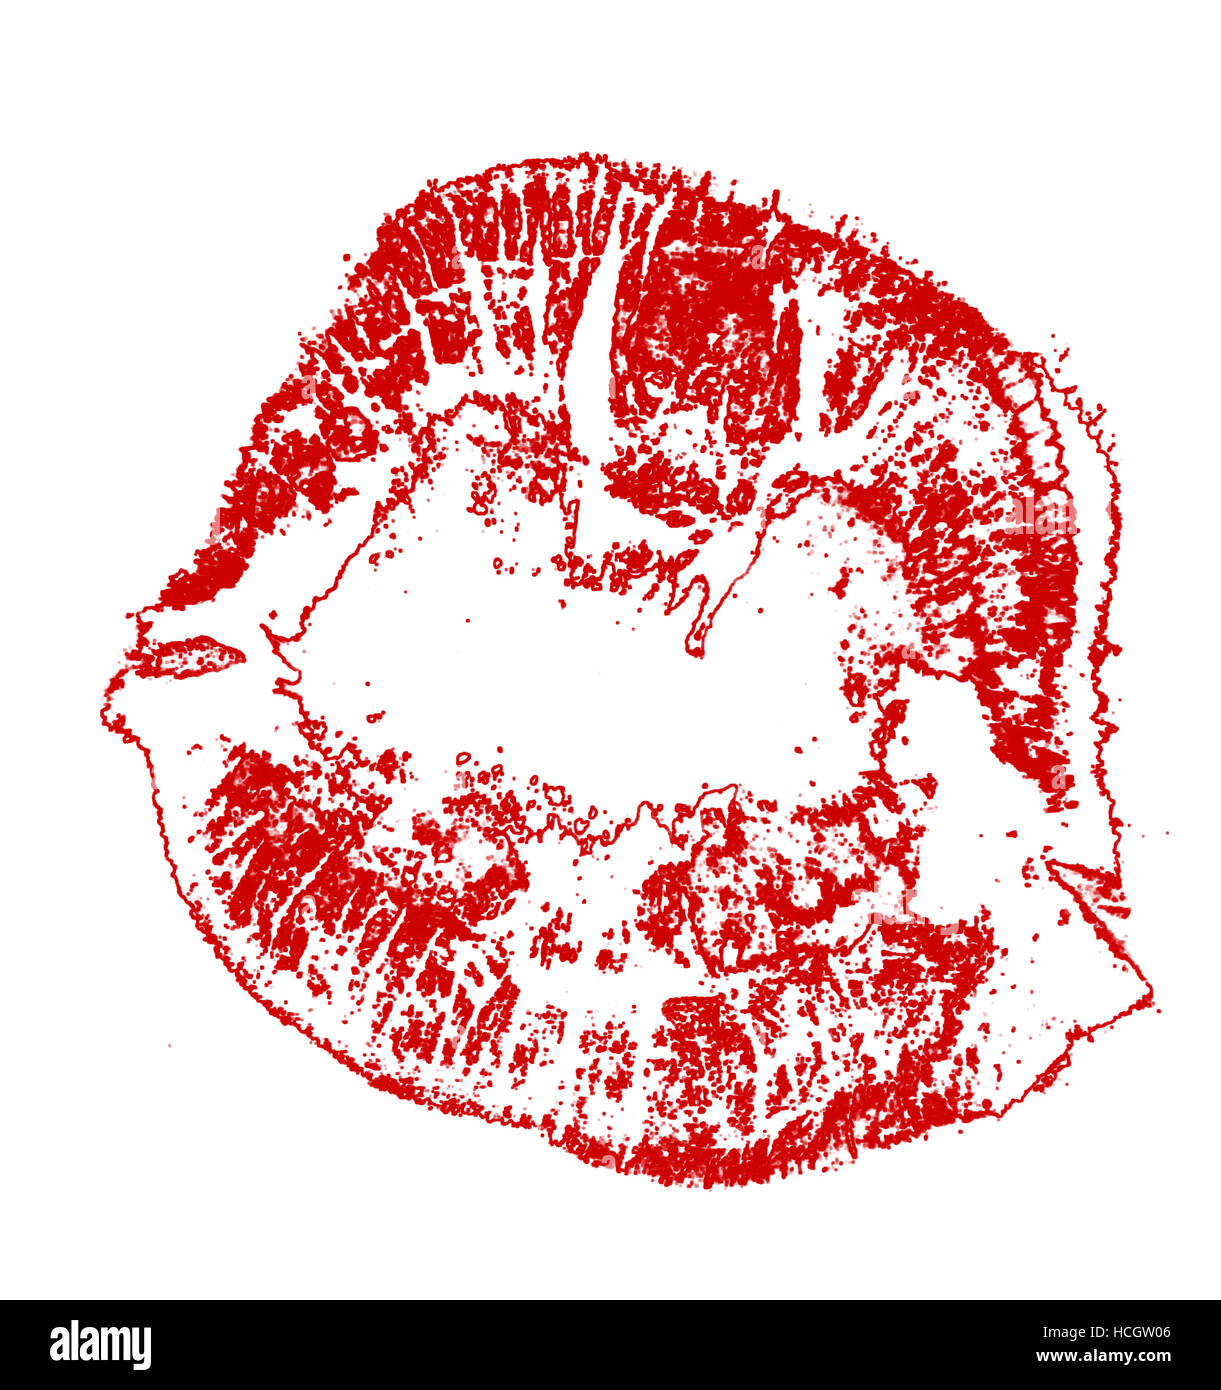 Labbra rosse imprint isolati su sfondo bianco. Foto Stock